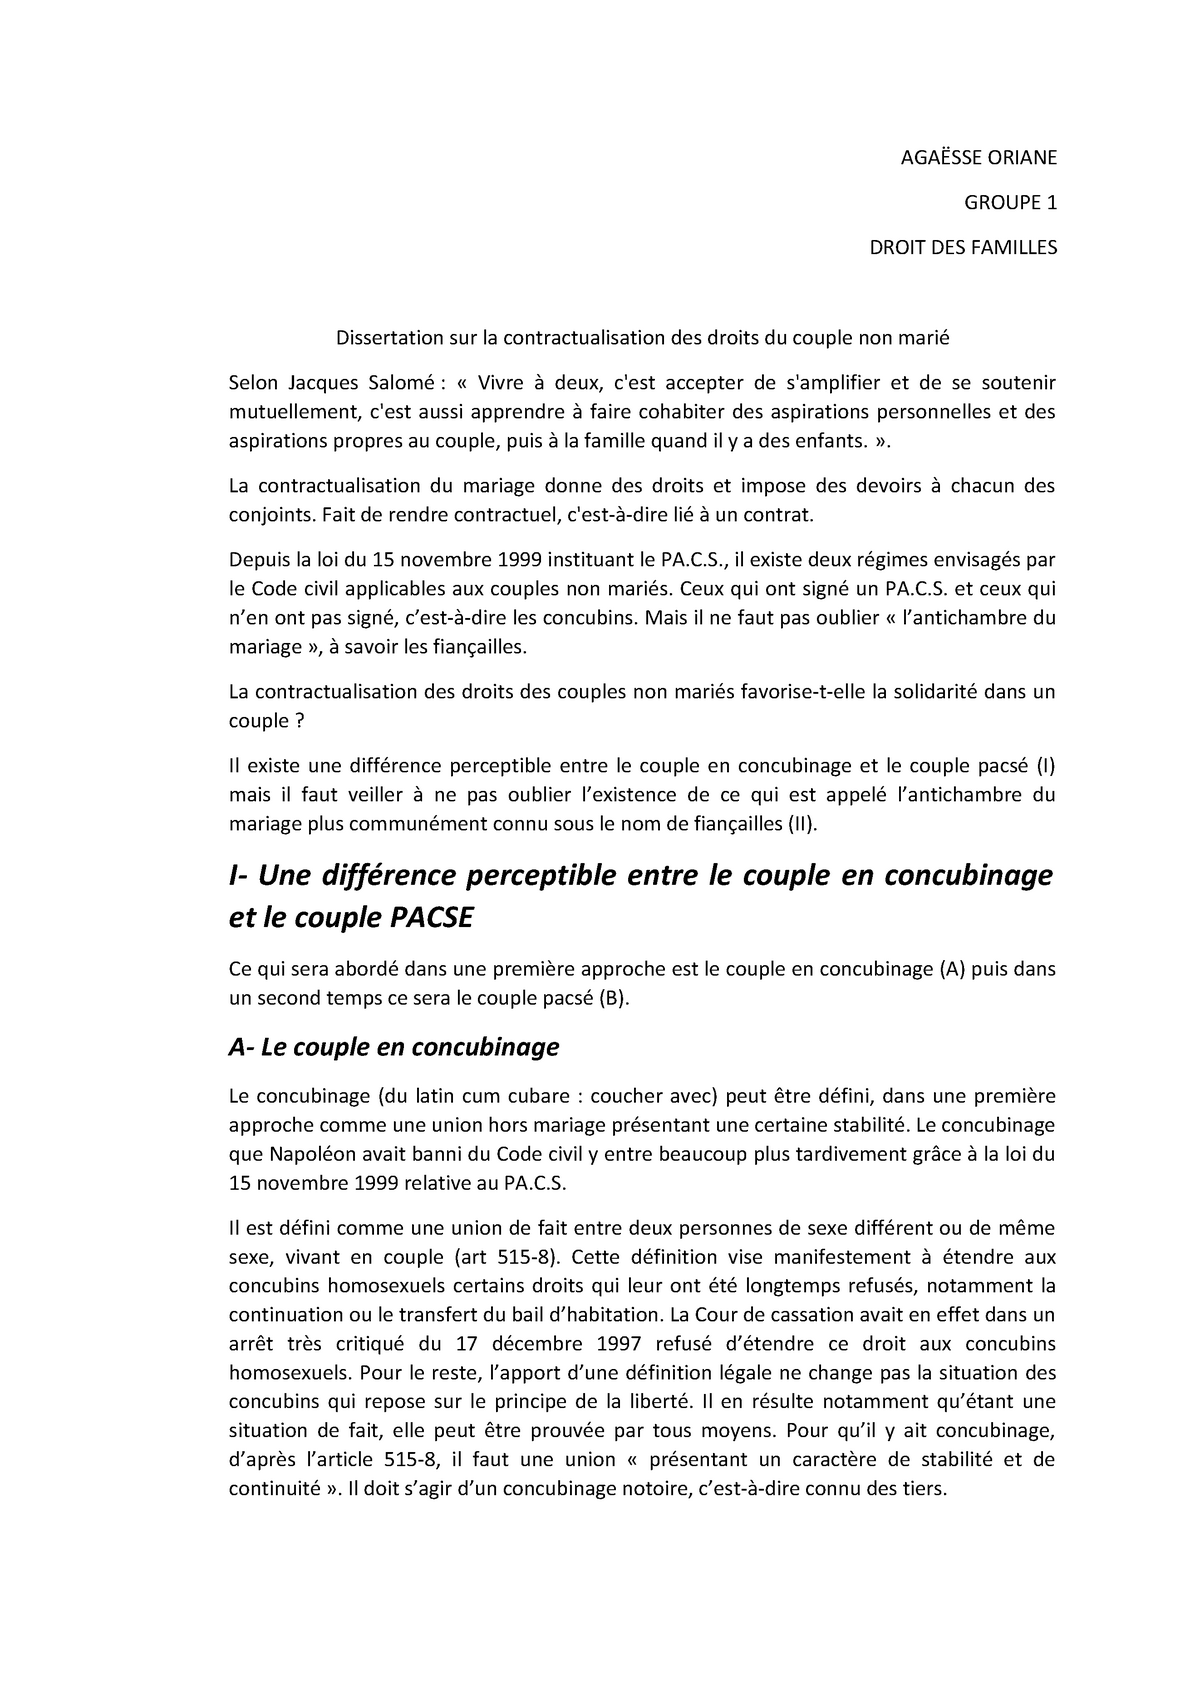 Dissertation Couples Non Marie Warning Tt Undefined Function 32 Agaesse Oriane Groupe 1 Droit Studocu